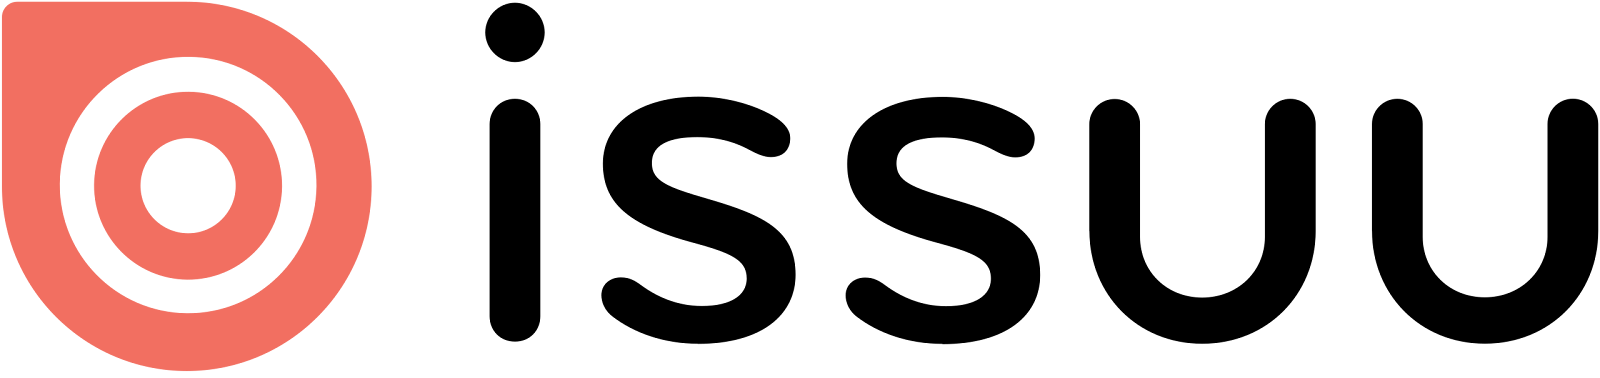 File:Issuu logo.svg - Wikimedia Commons